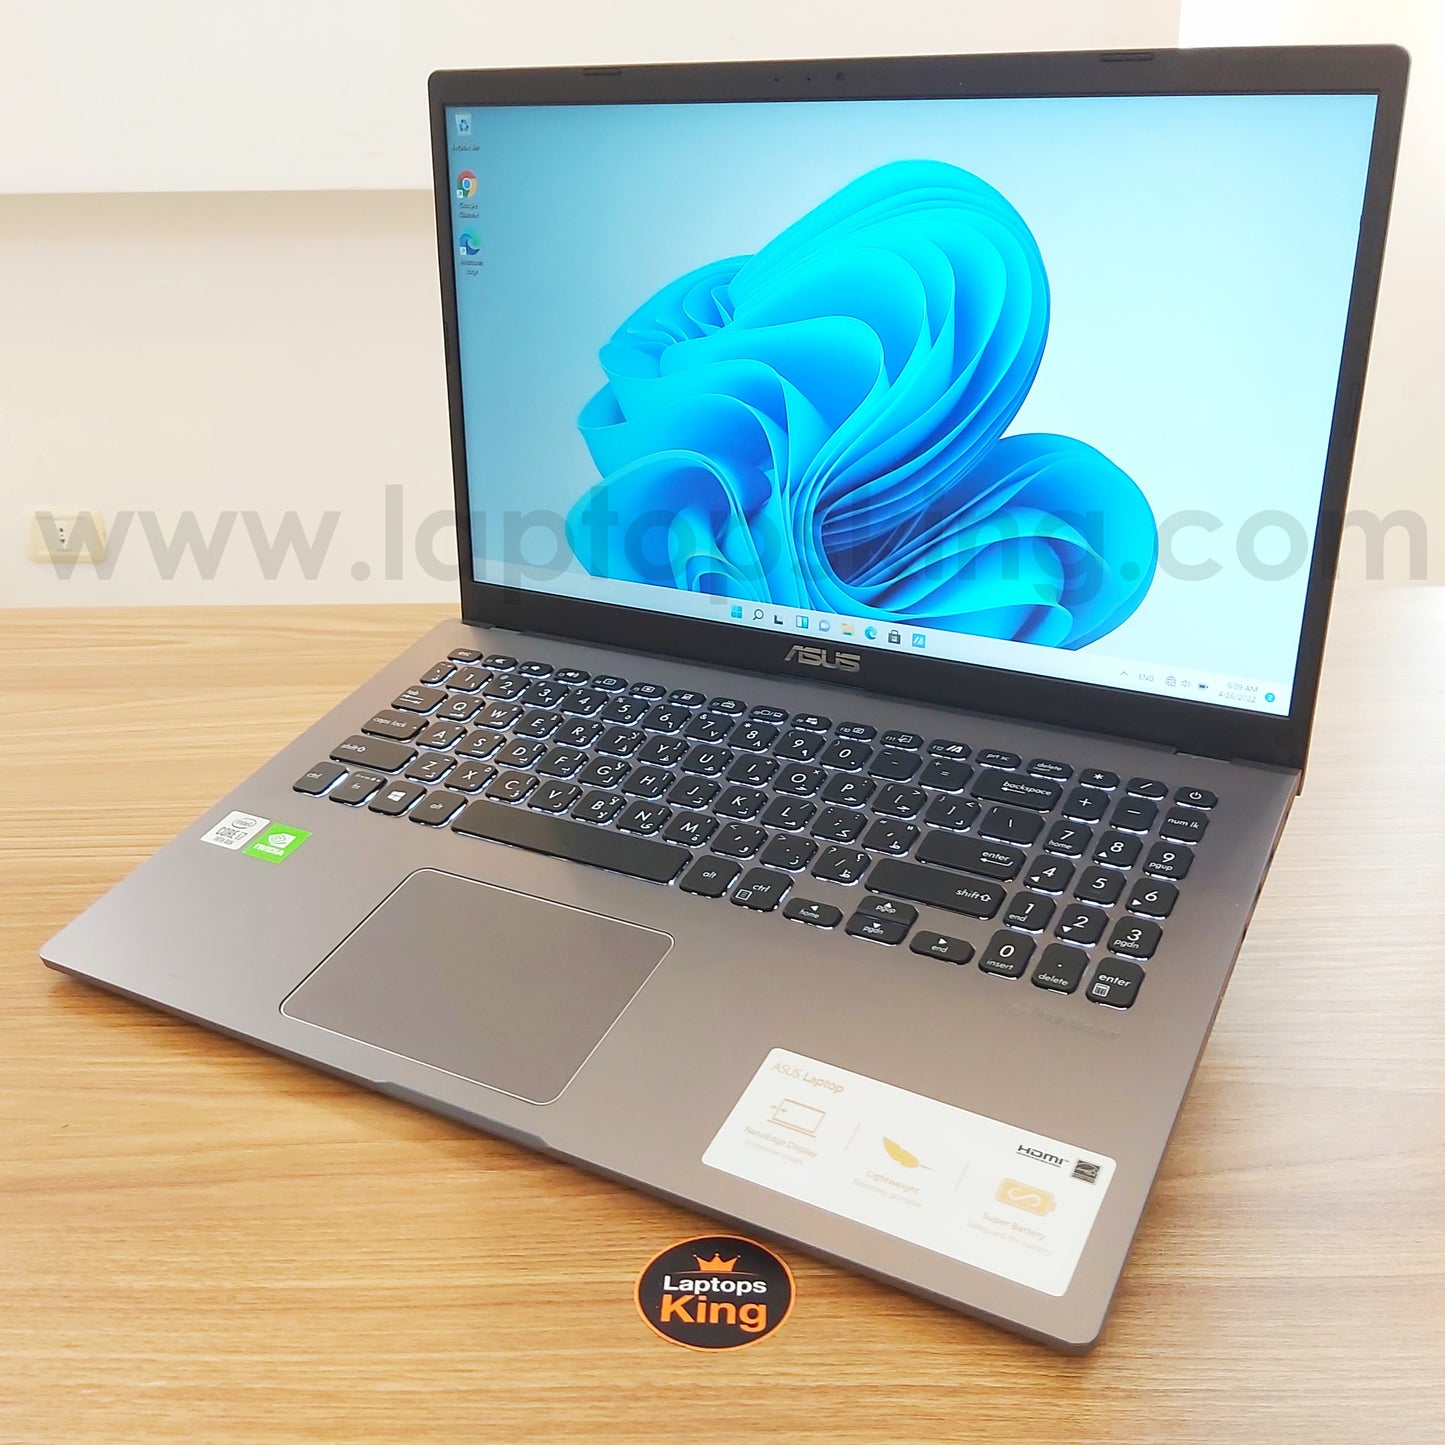 Asus VivoBook X509jb i7-1065G7 GeForce MX110 Laptop (New Open Box)